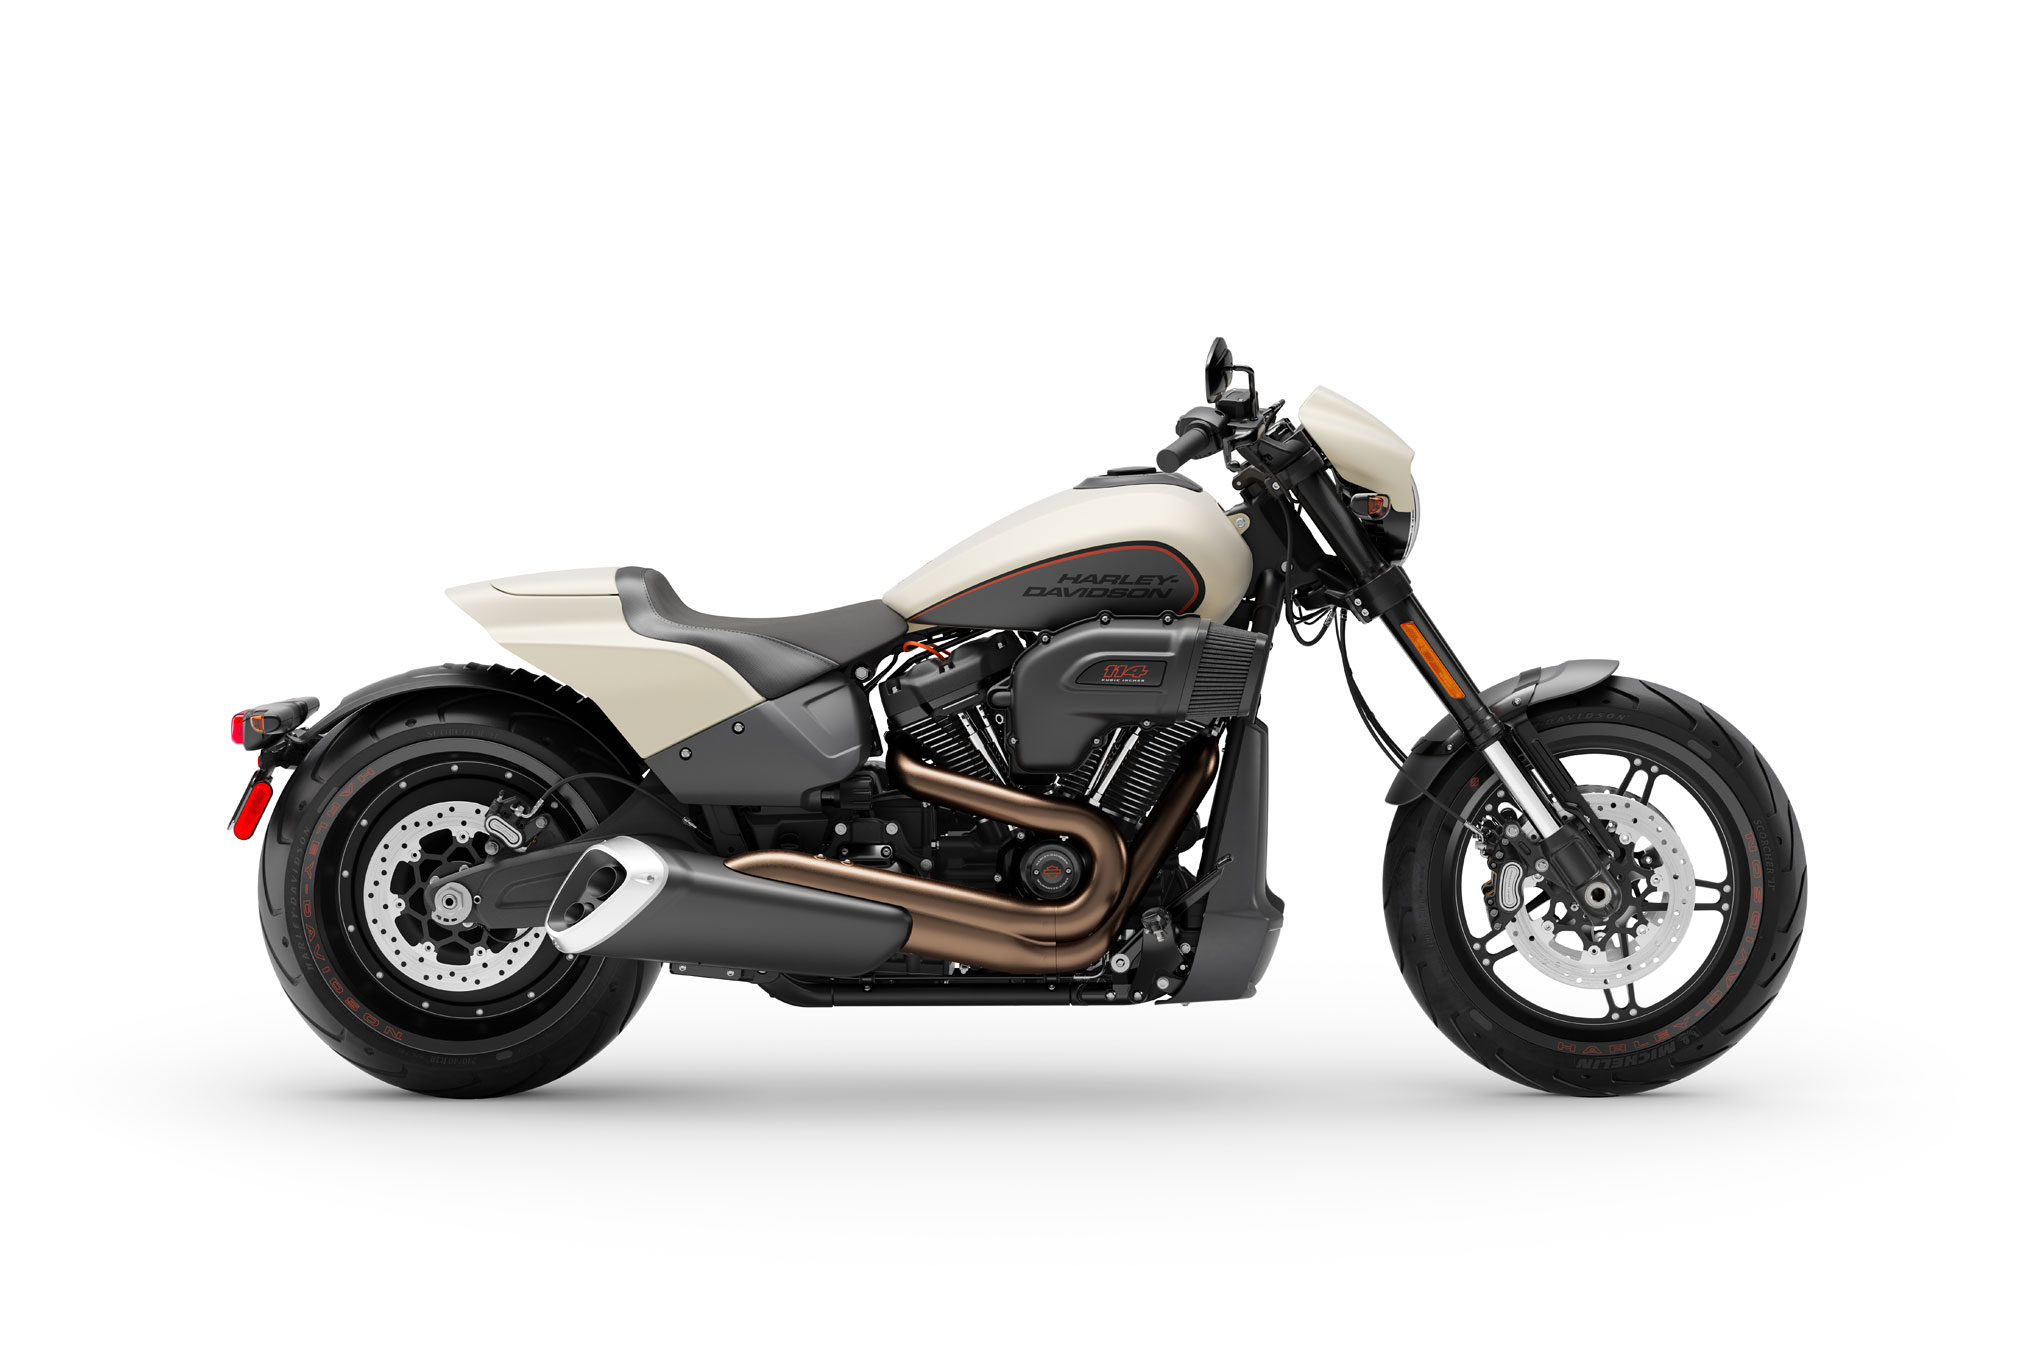  2019 Harley Davidson FXDR 114 Guide Total Motorcycle